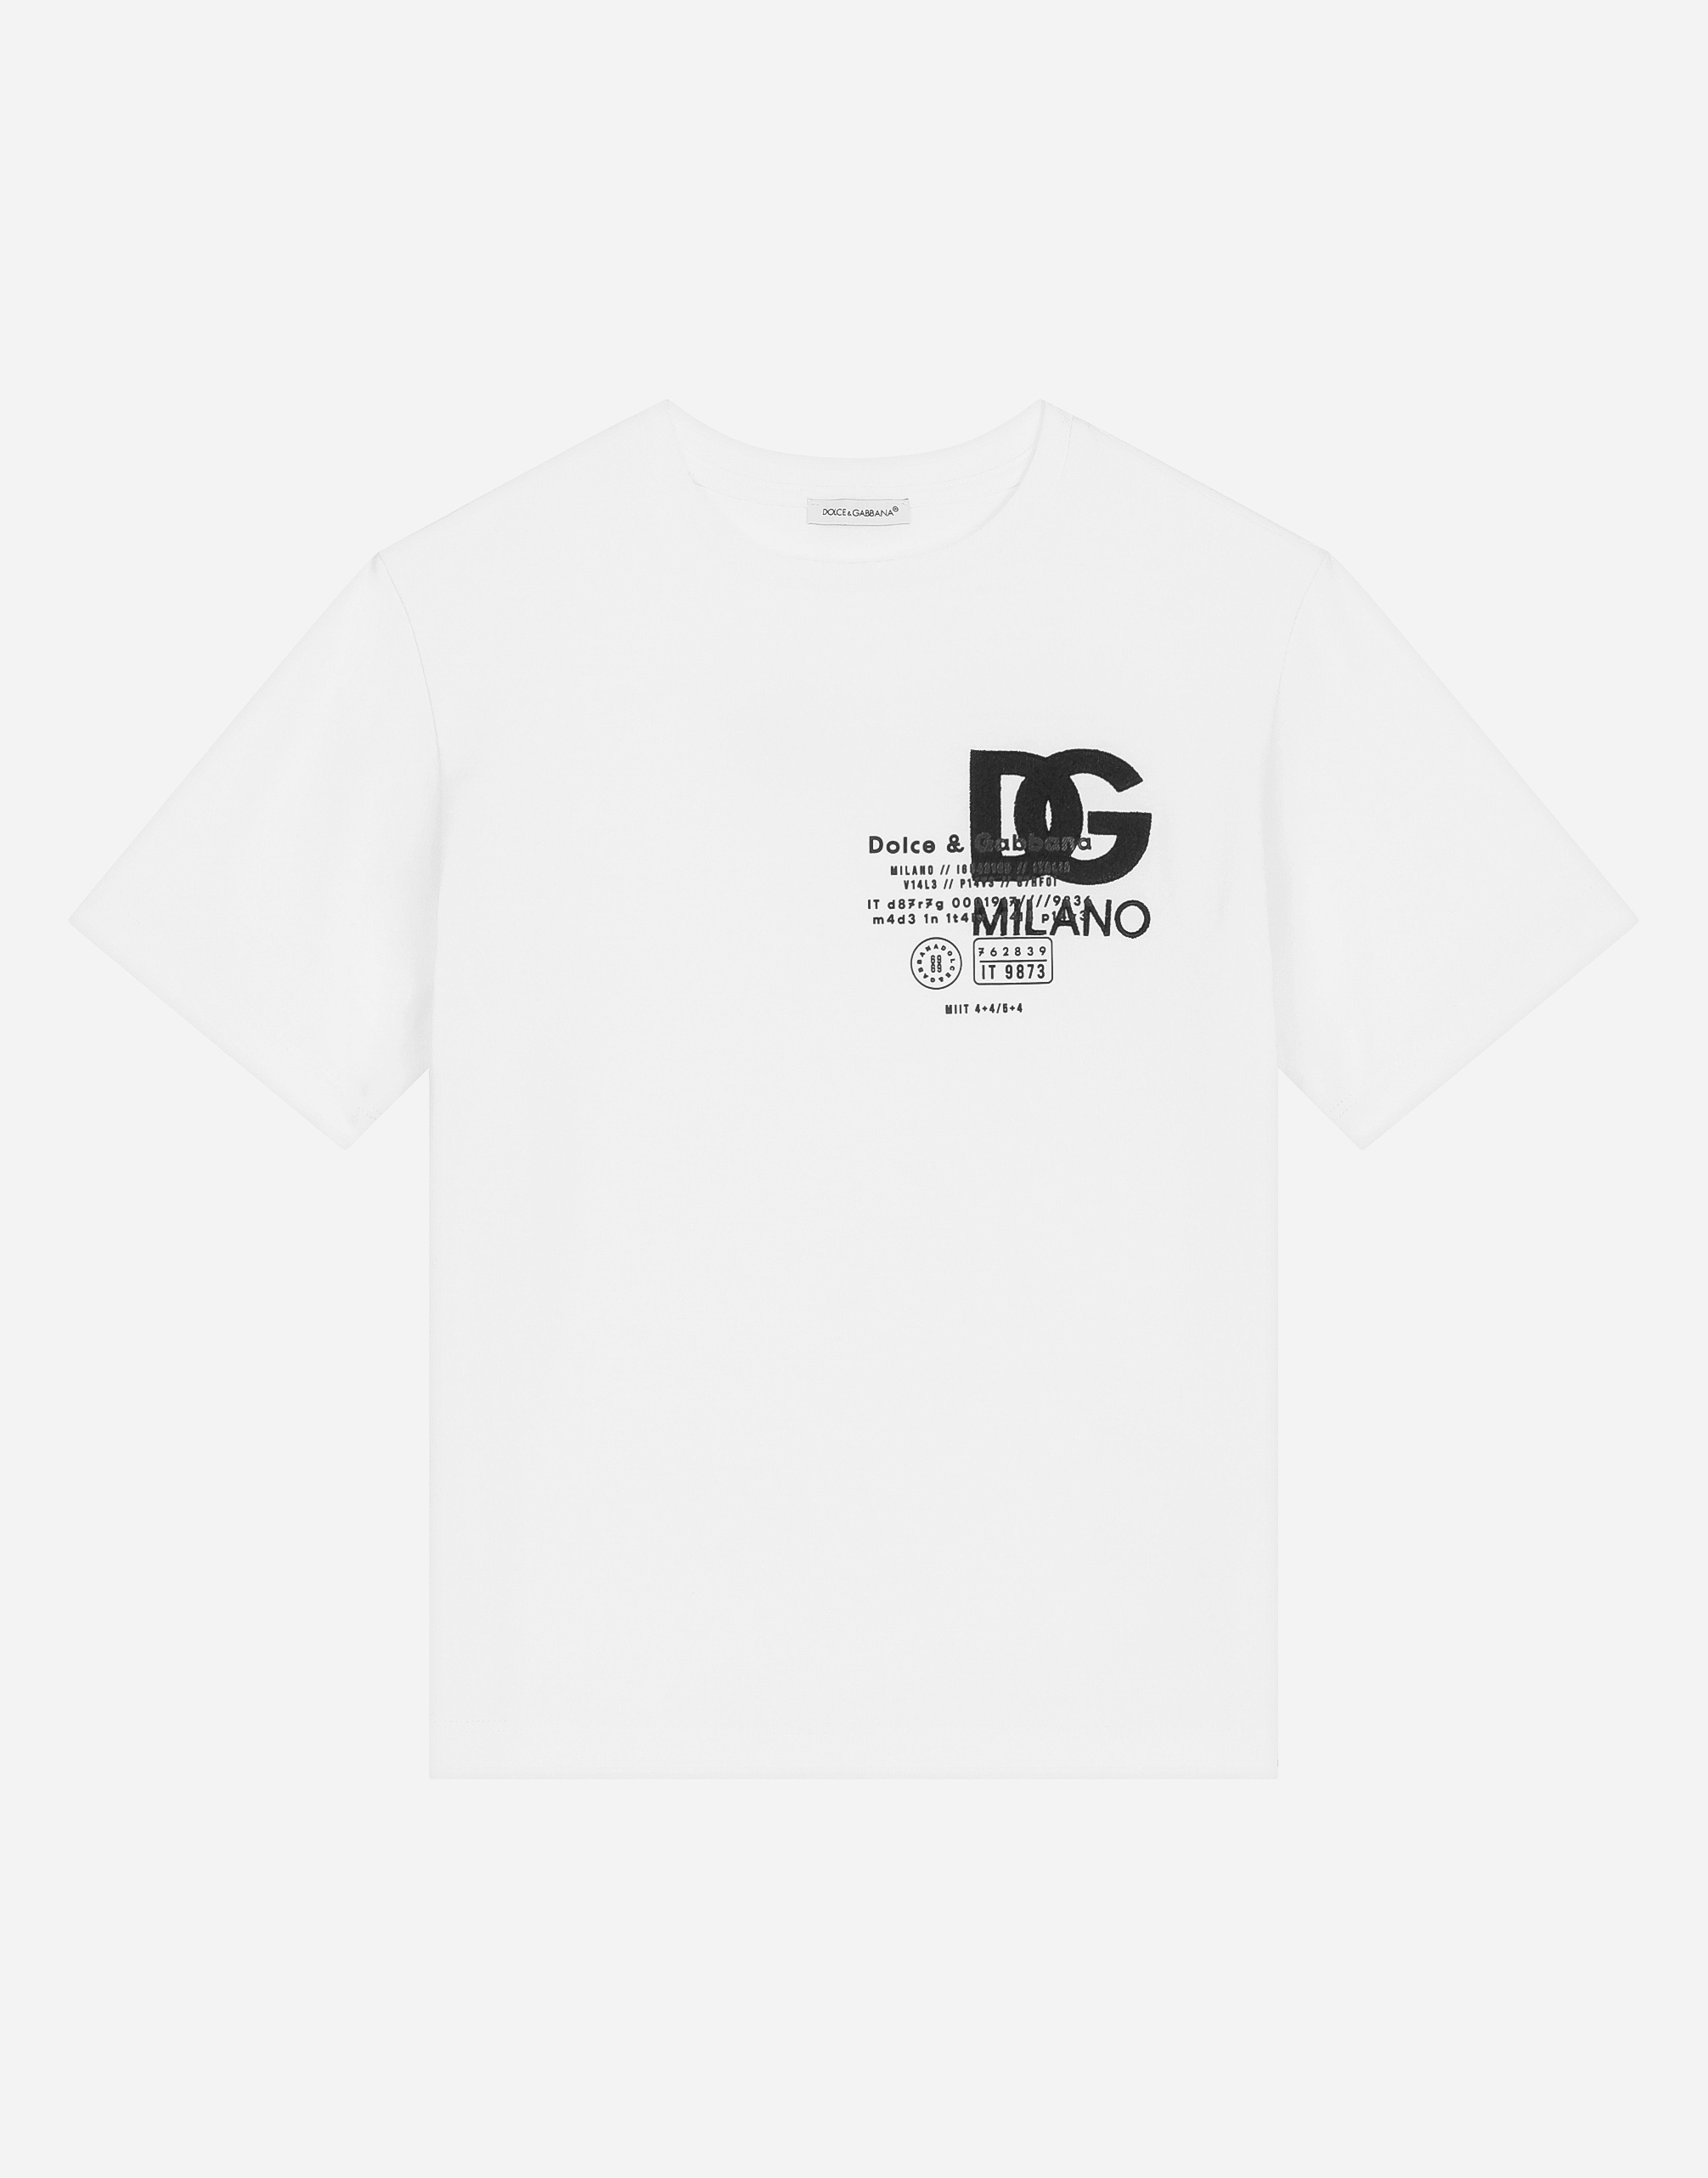 Dolce & Gabbana Kids' Boys White Cotton Dg Milano T-shirt